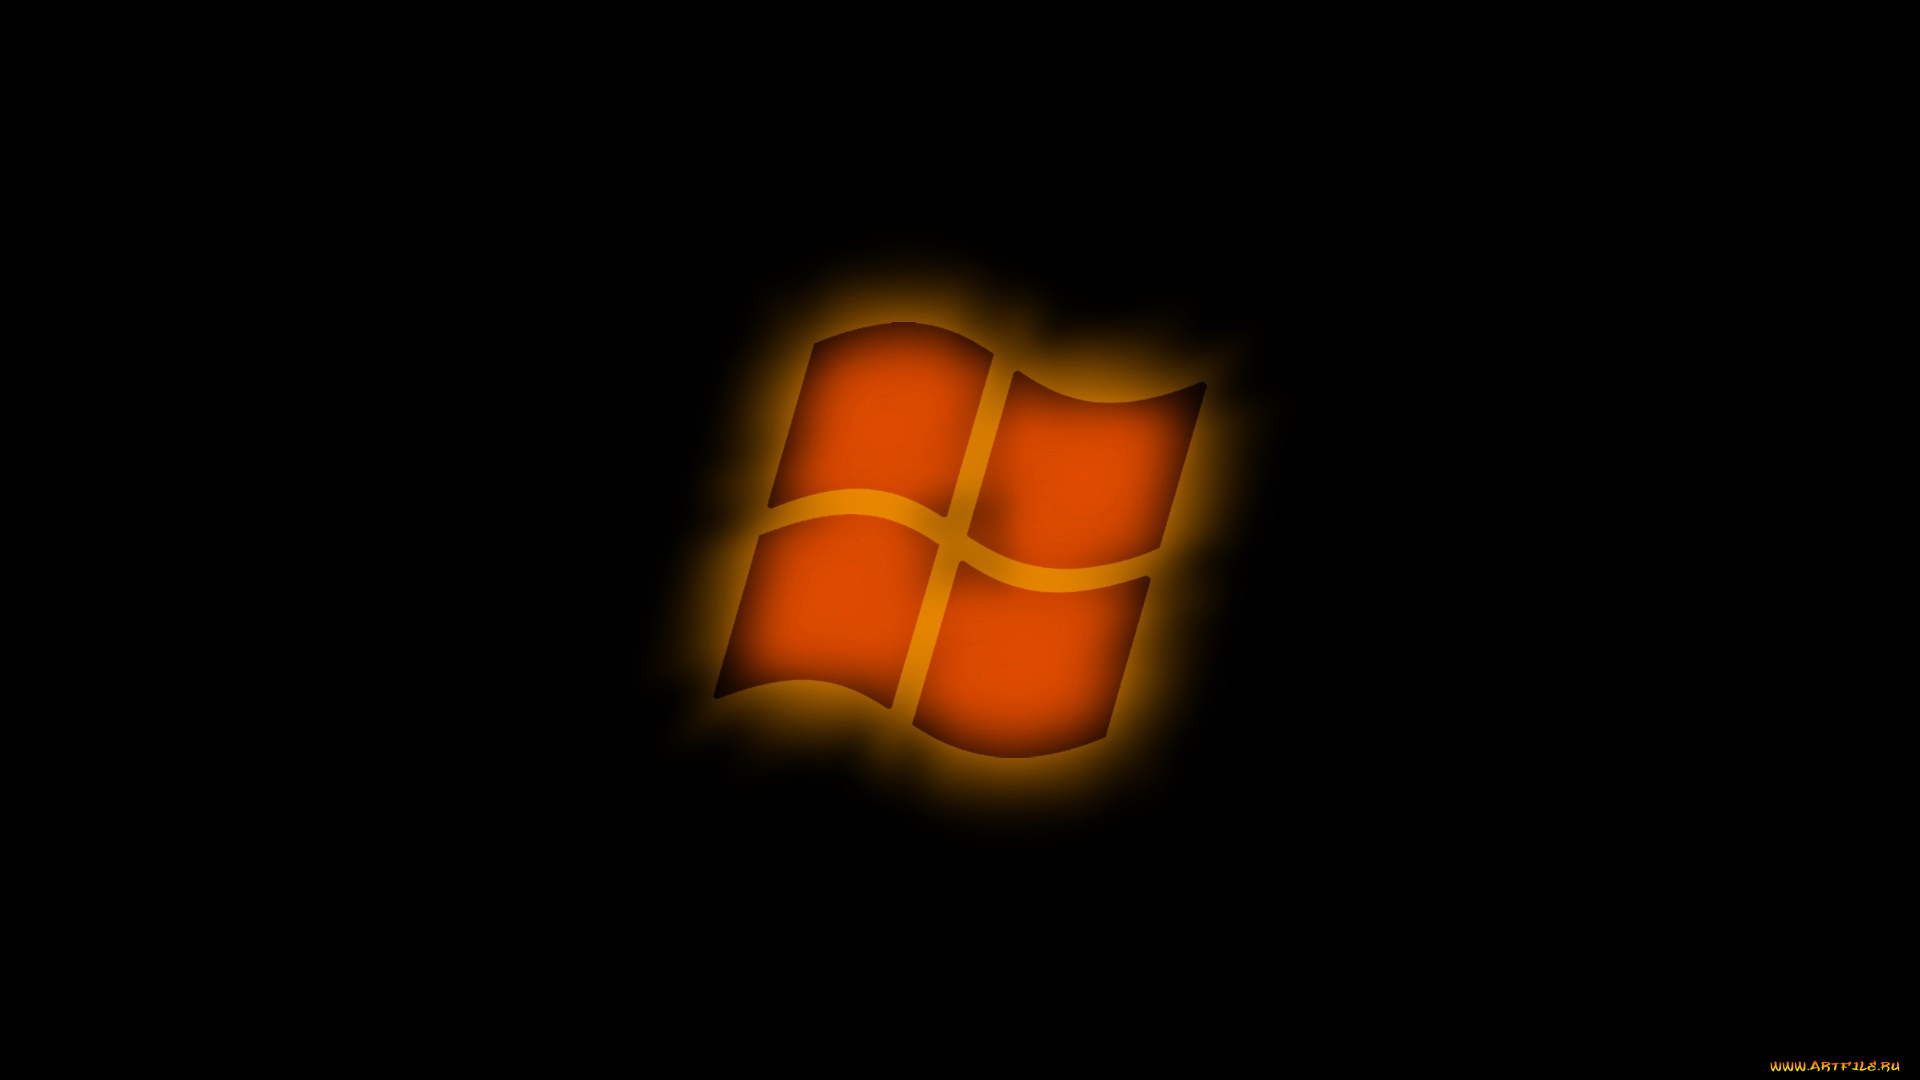 Уплывающий логотип Windows Xp бесплатно